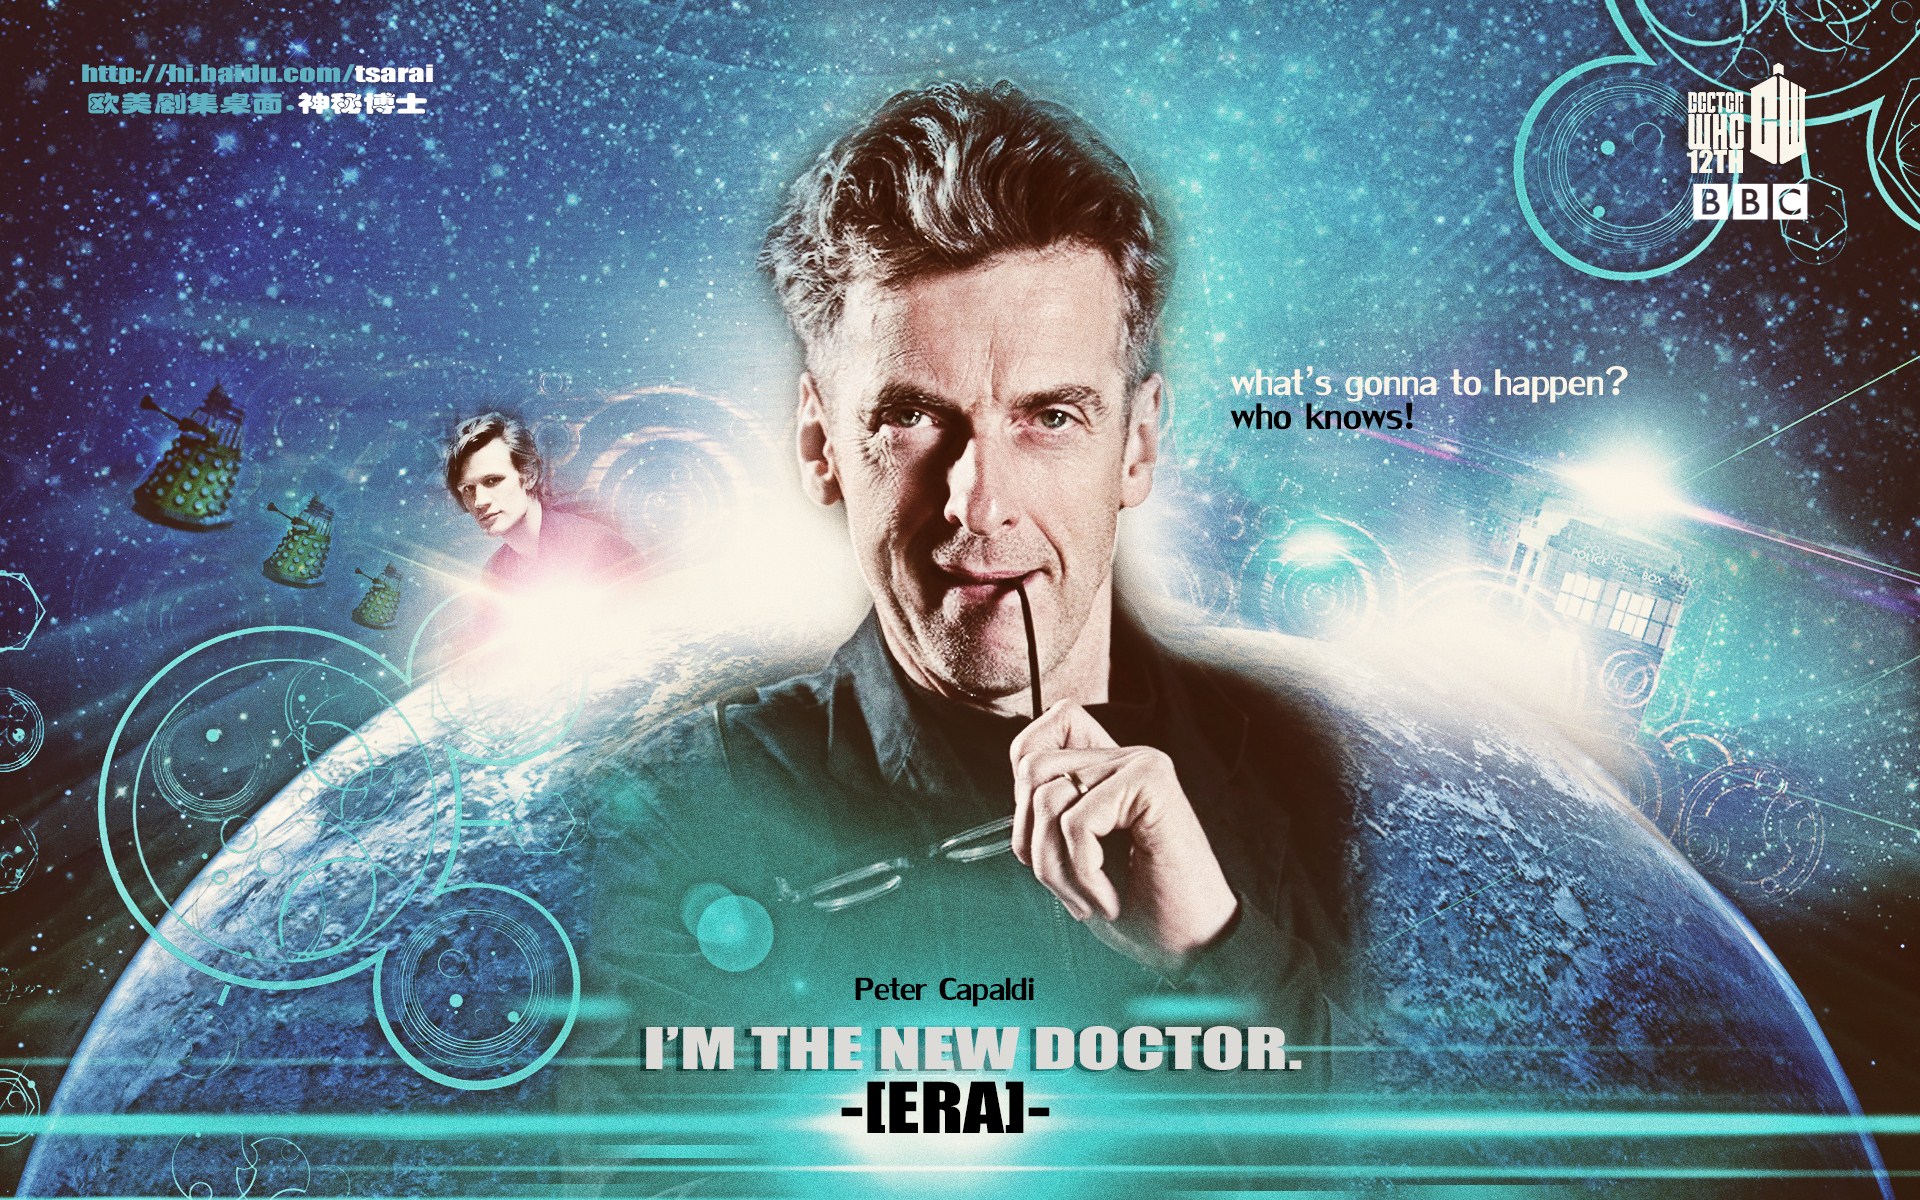 Doctor Who image doctor who 36211531 1920 1200jpg 1920x1200